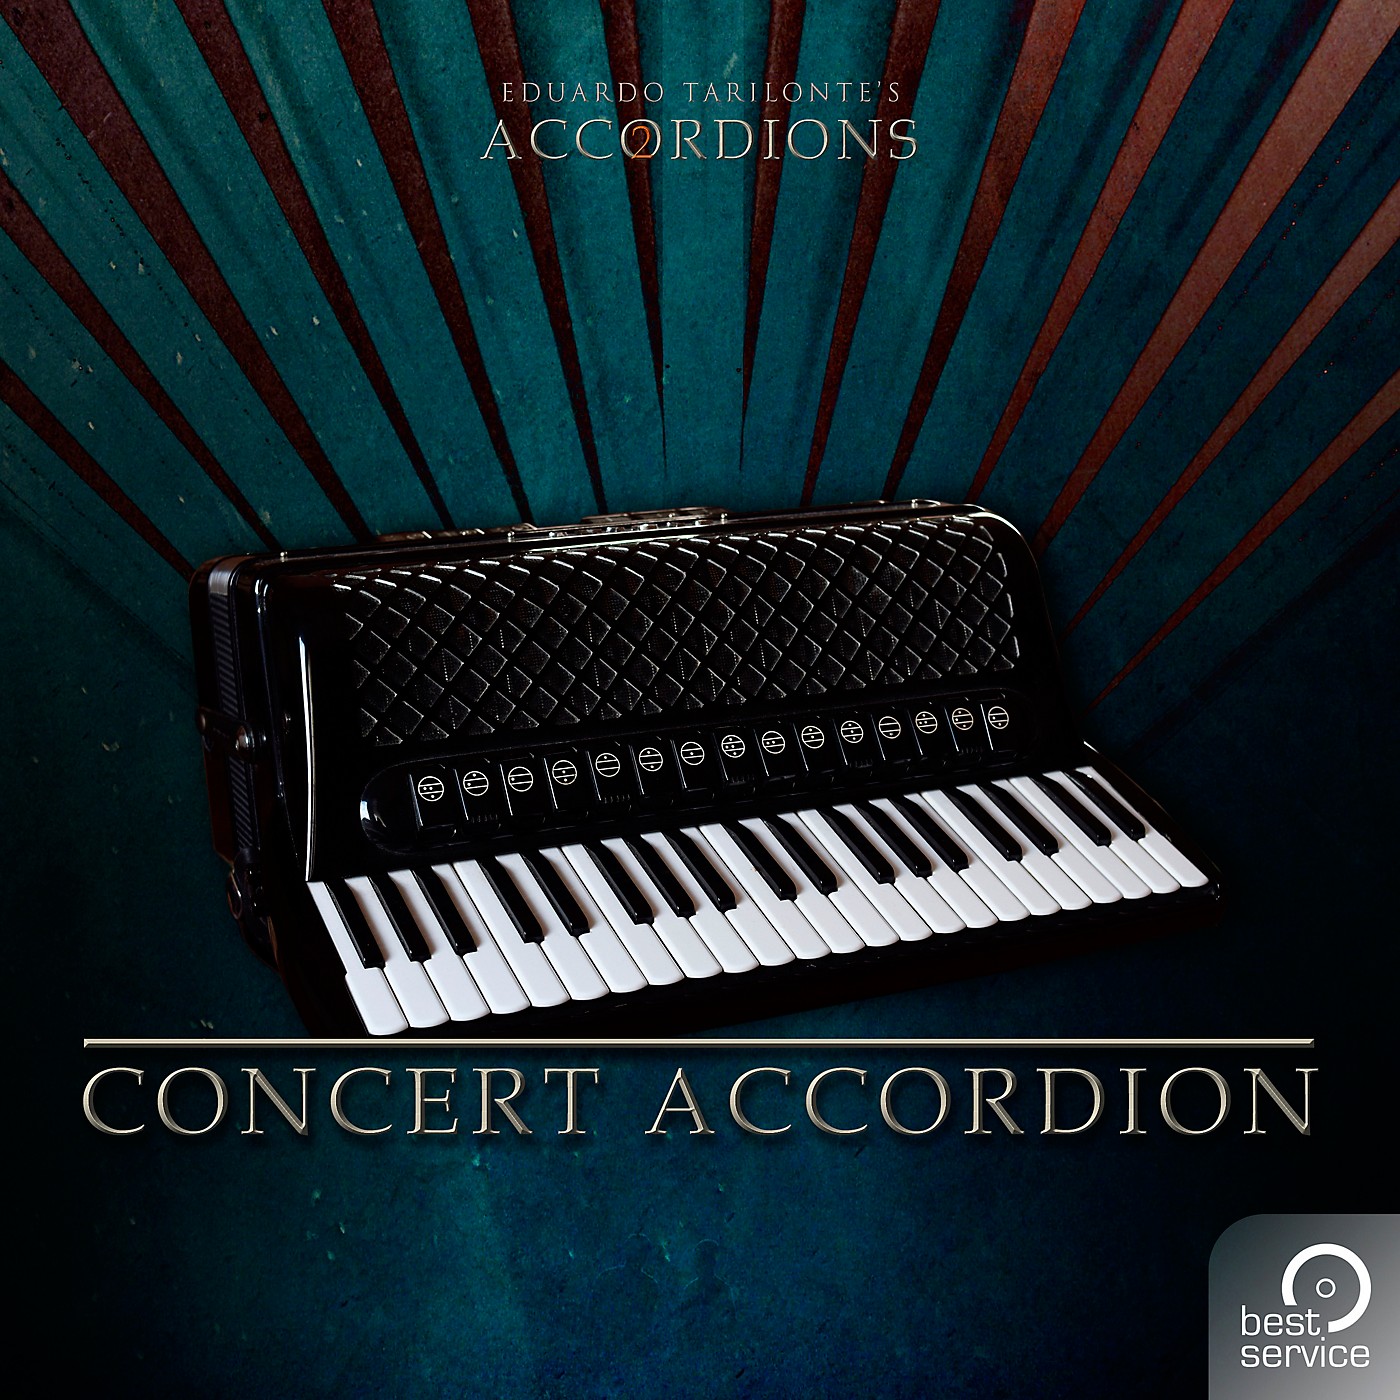 Best Service Accordions 2 - Single Concert Accordion thumbnail